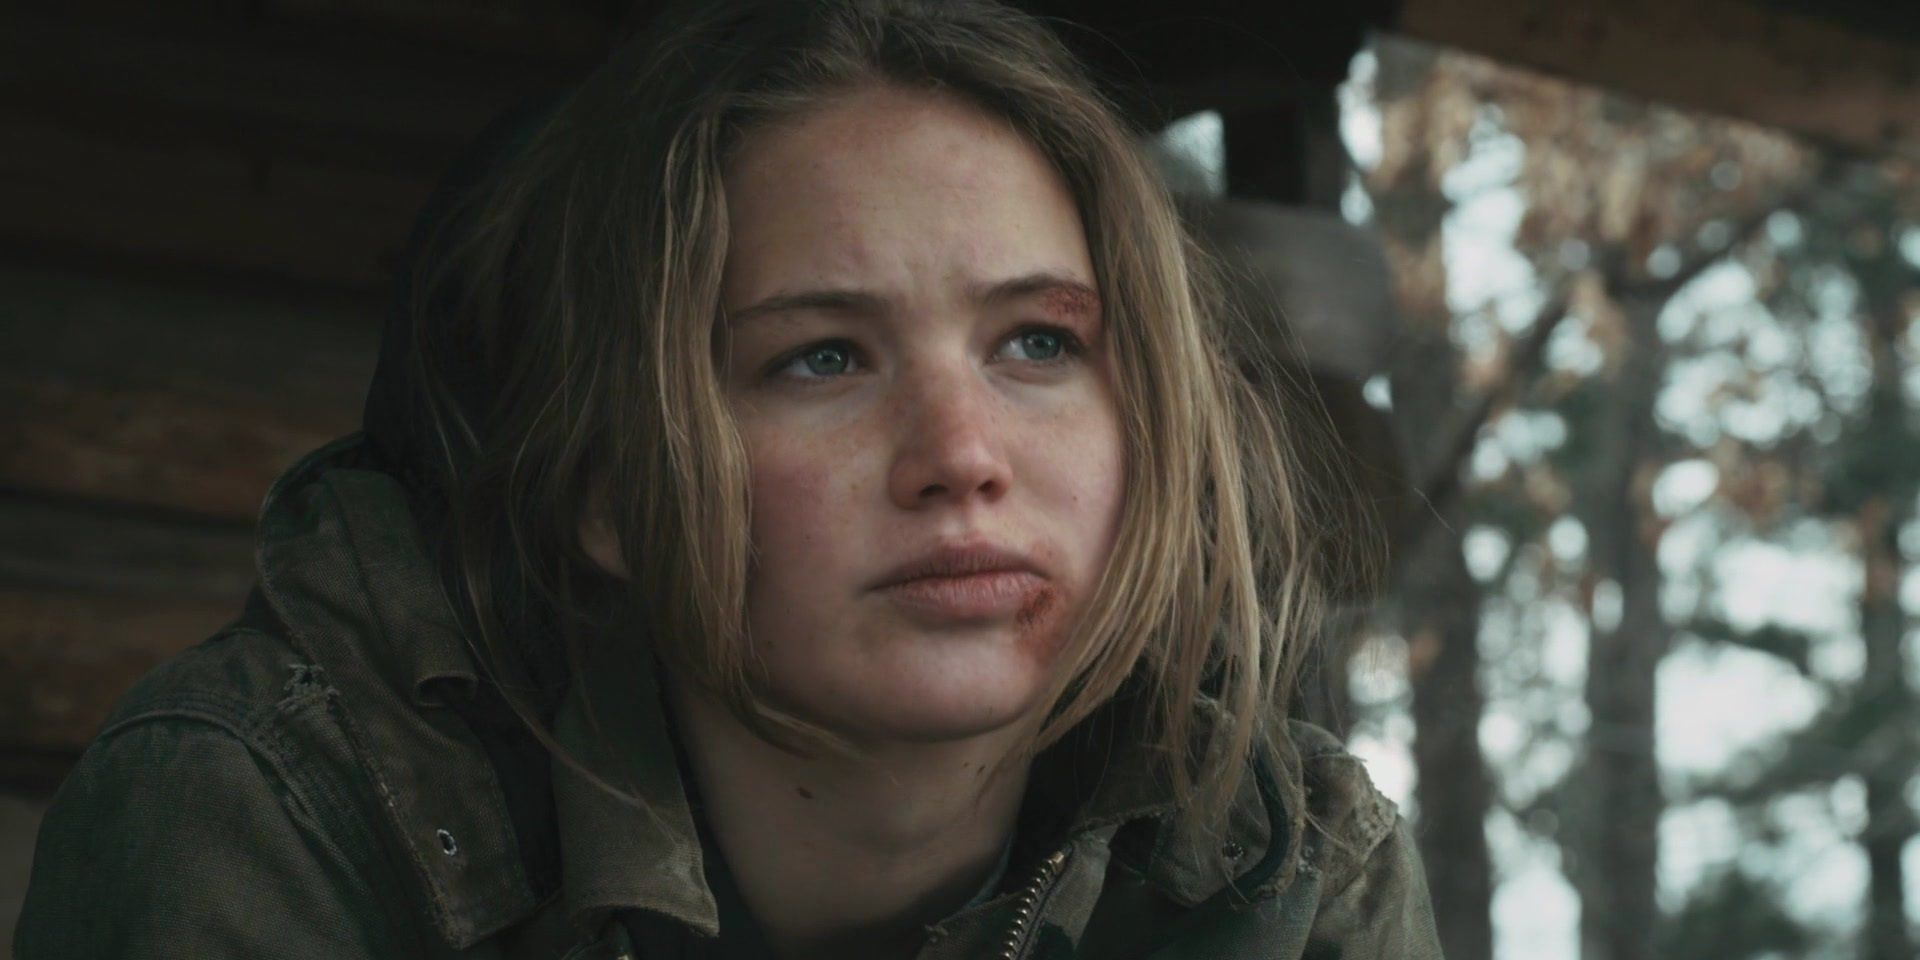 Jennifer Lawrence’s 15 Best Movies (According To IMDb)